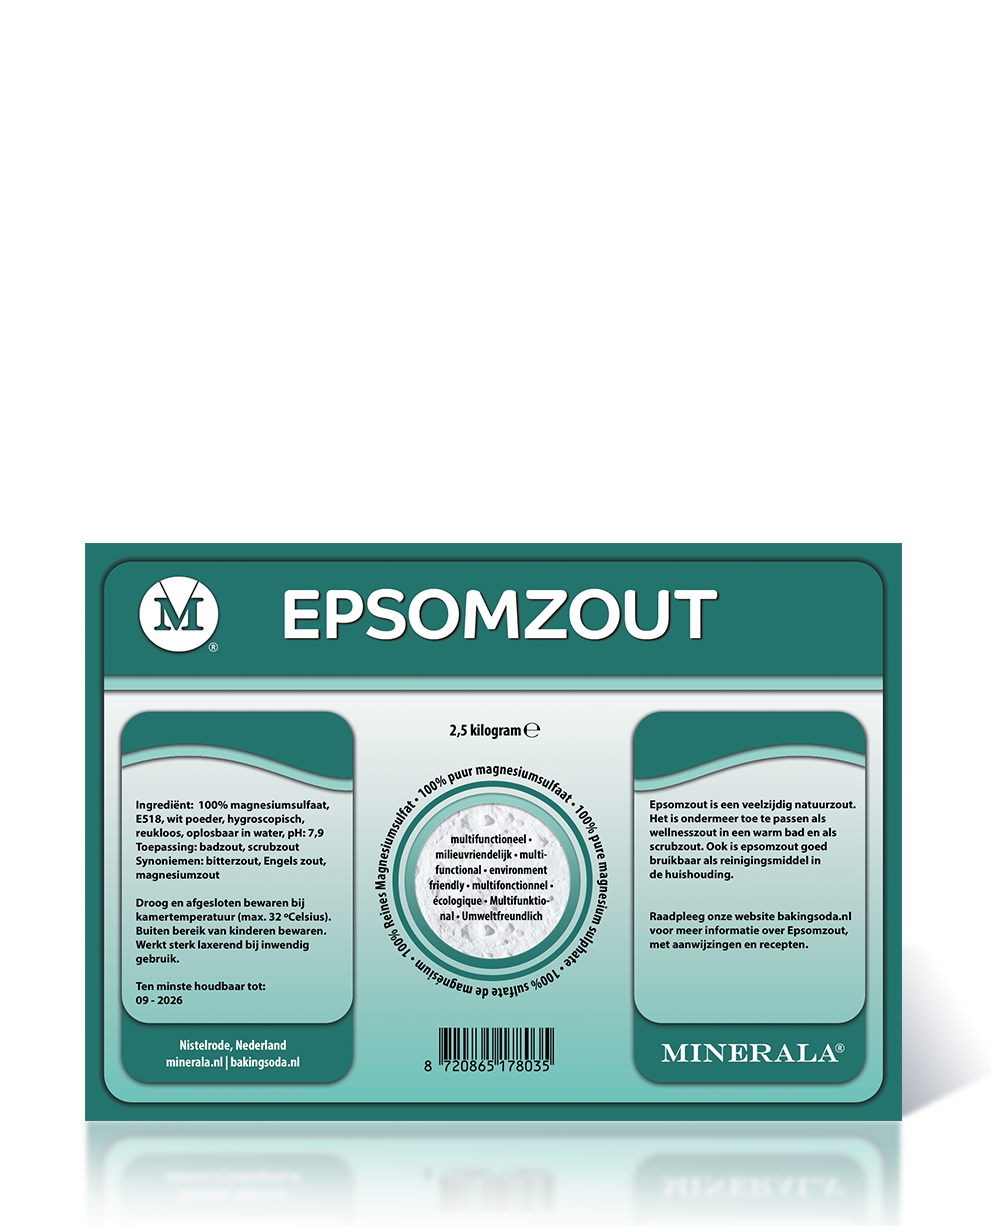 Minerala Basics - Epsomzout 2,5kilo. Baking Soda NL, Nistelrode